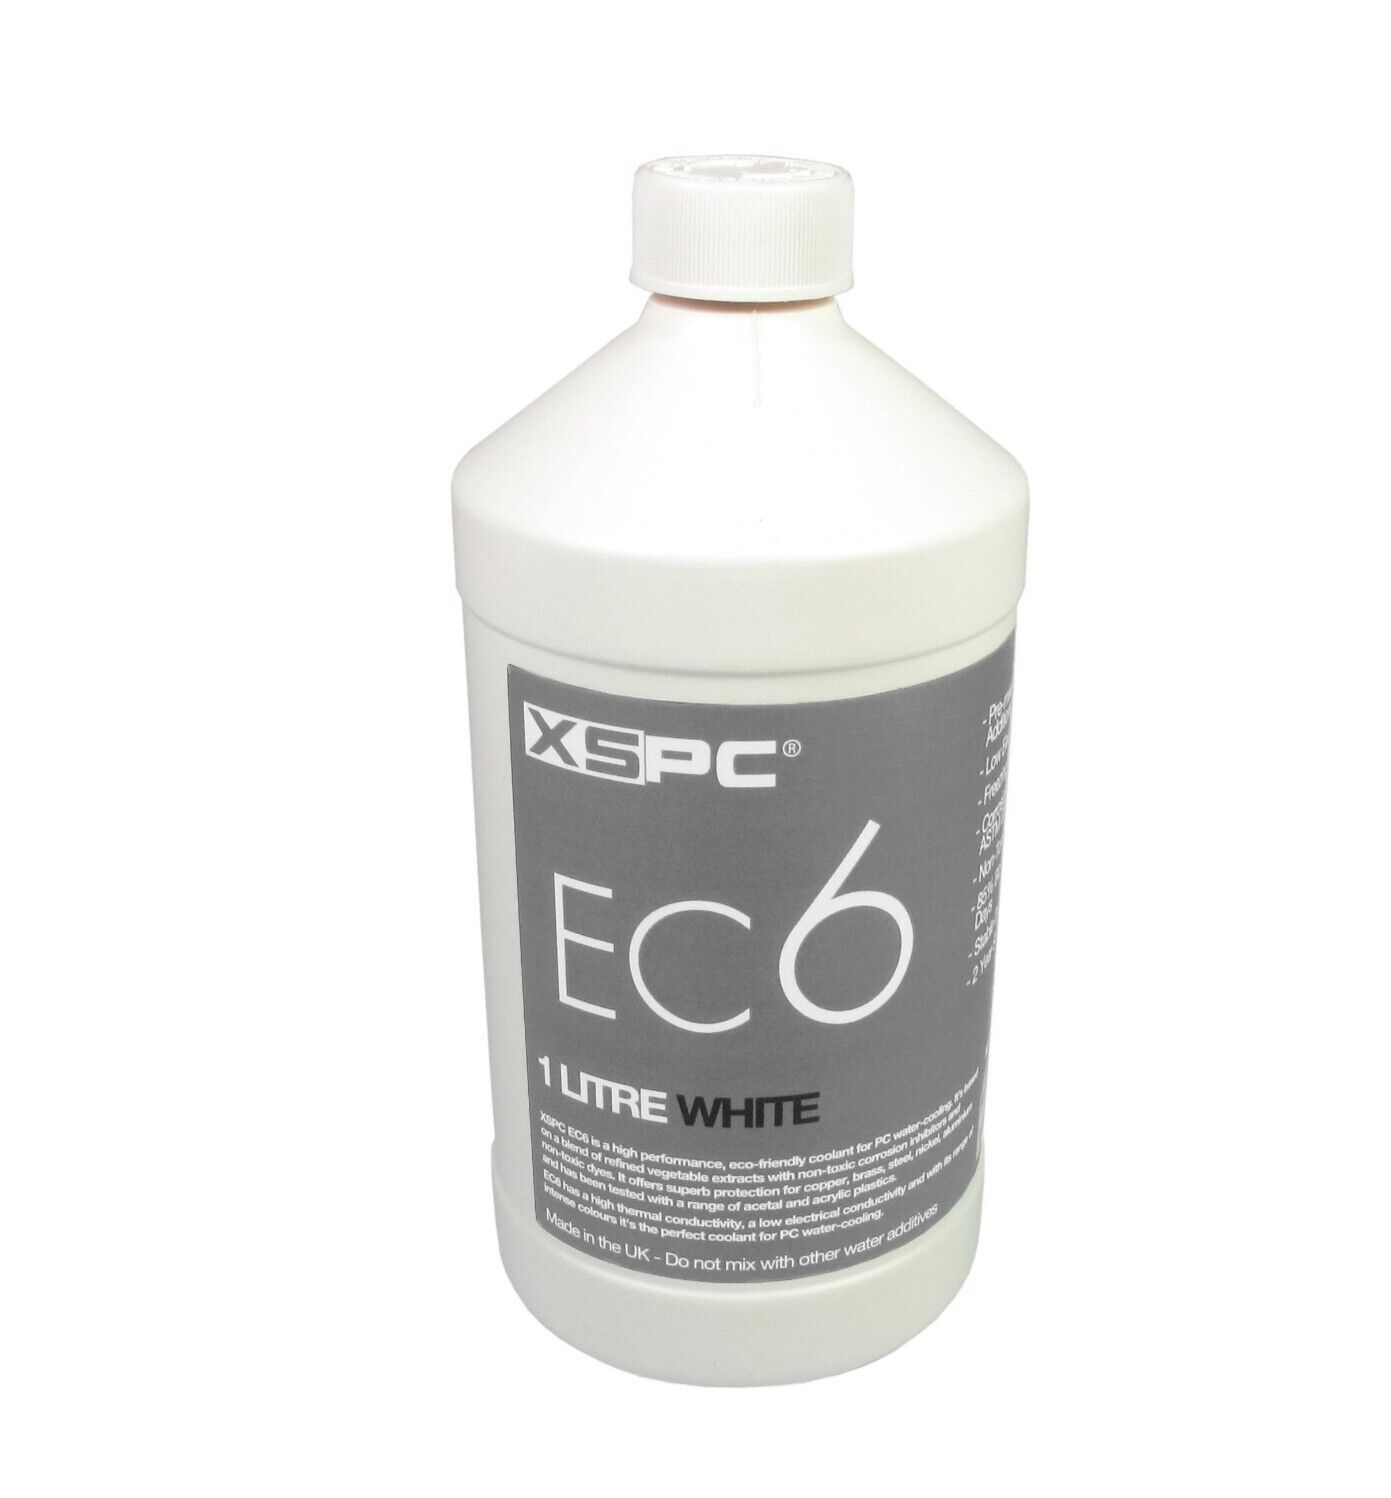 XSPC EC6 High Performance Premix PC Coolant, 1000 mL, Solid Opaque White